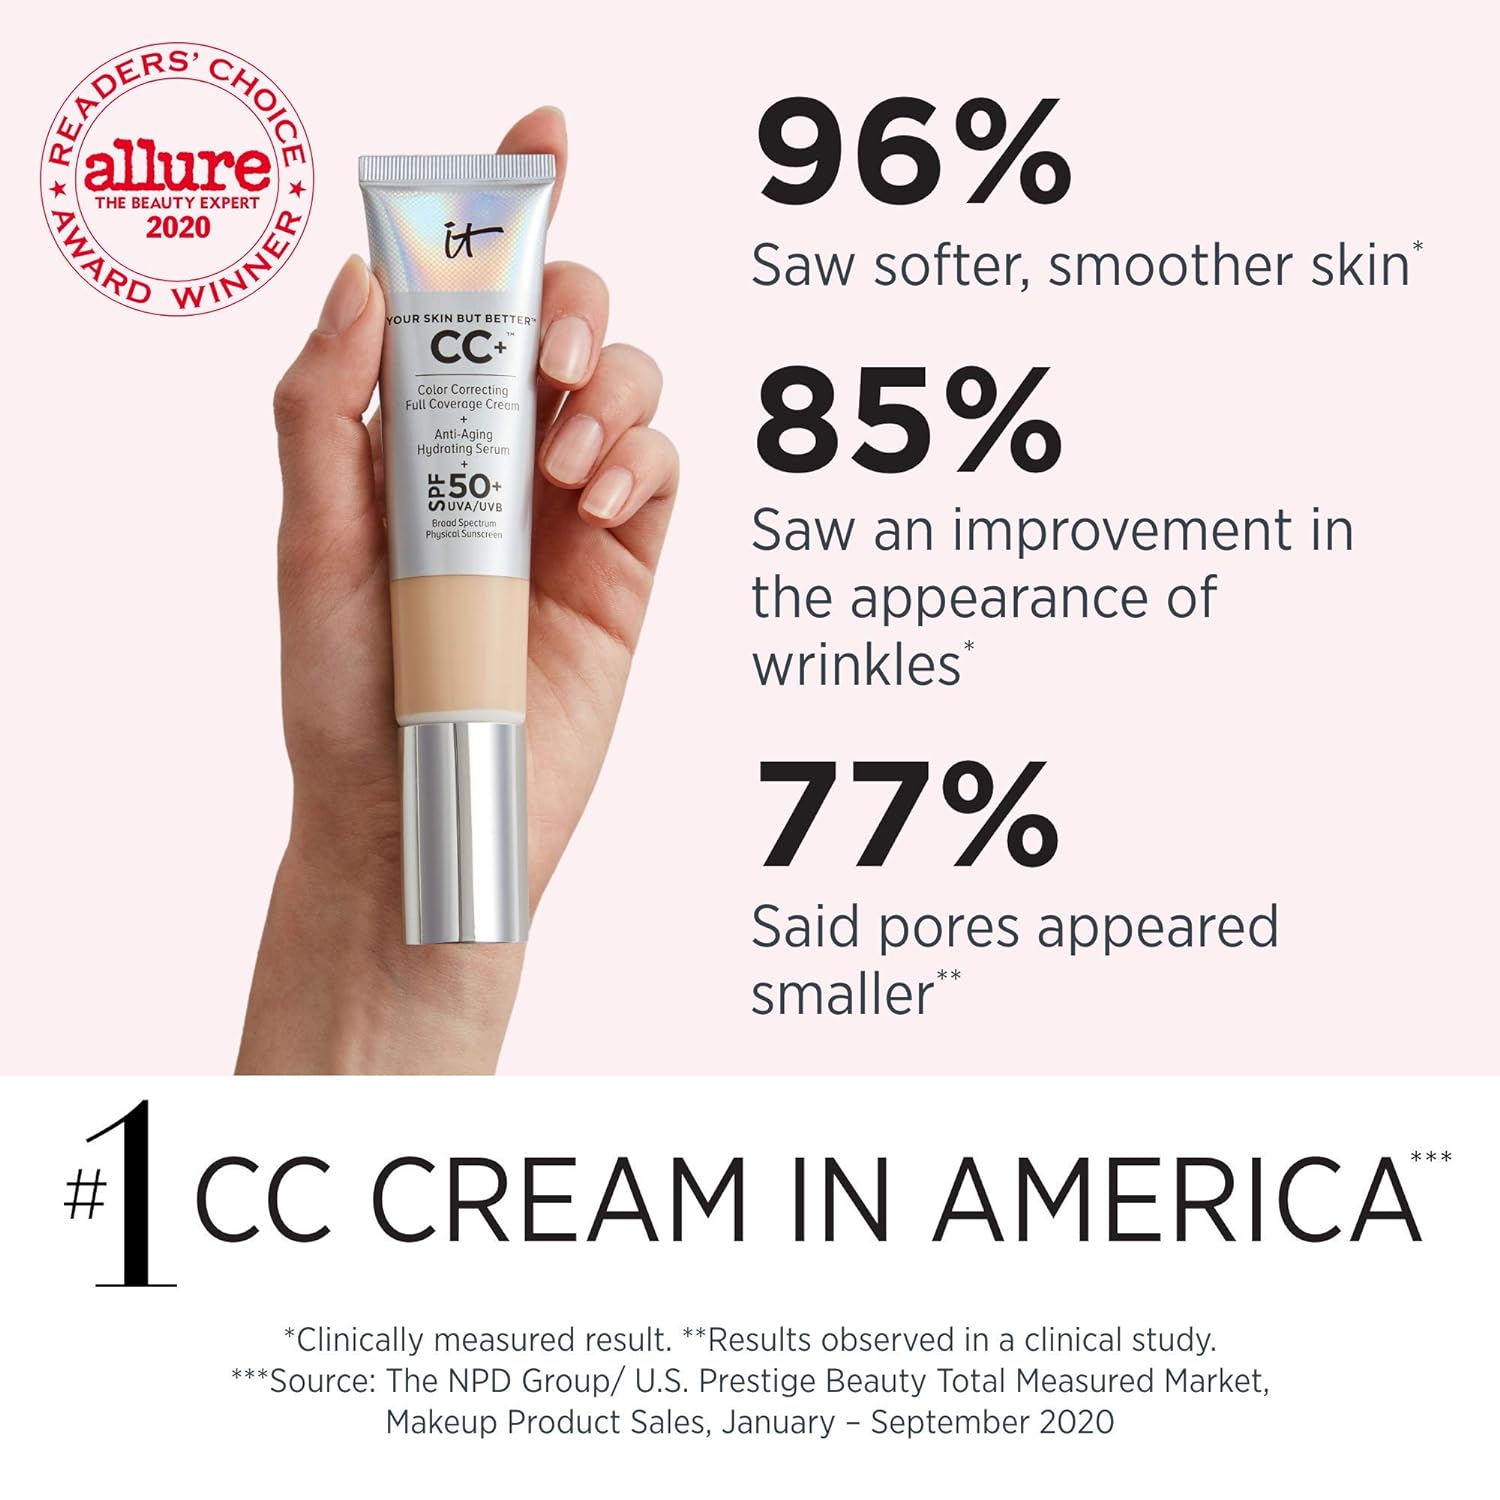  IT Cosmetics Your Skin But Better CC+ Cream, Neutral Medium (N) - Color Correcting Cream, Full-Coverage Foundation, Anti-Aging Serum & SPF 50+ Sunscreen - Natural Finish - 1.08 fl